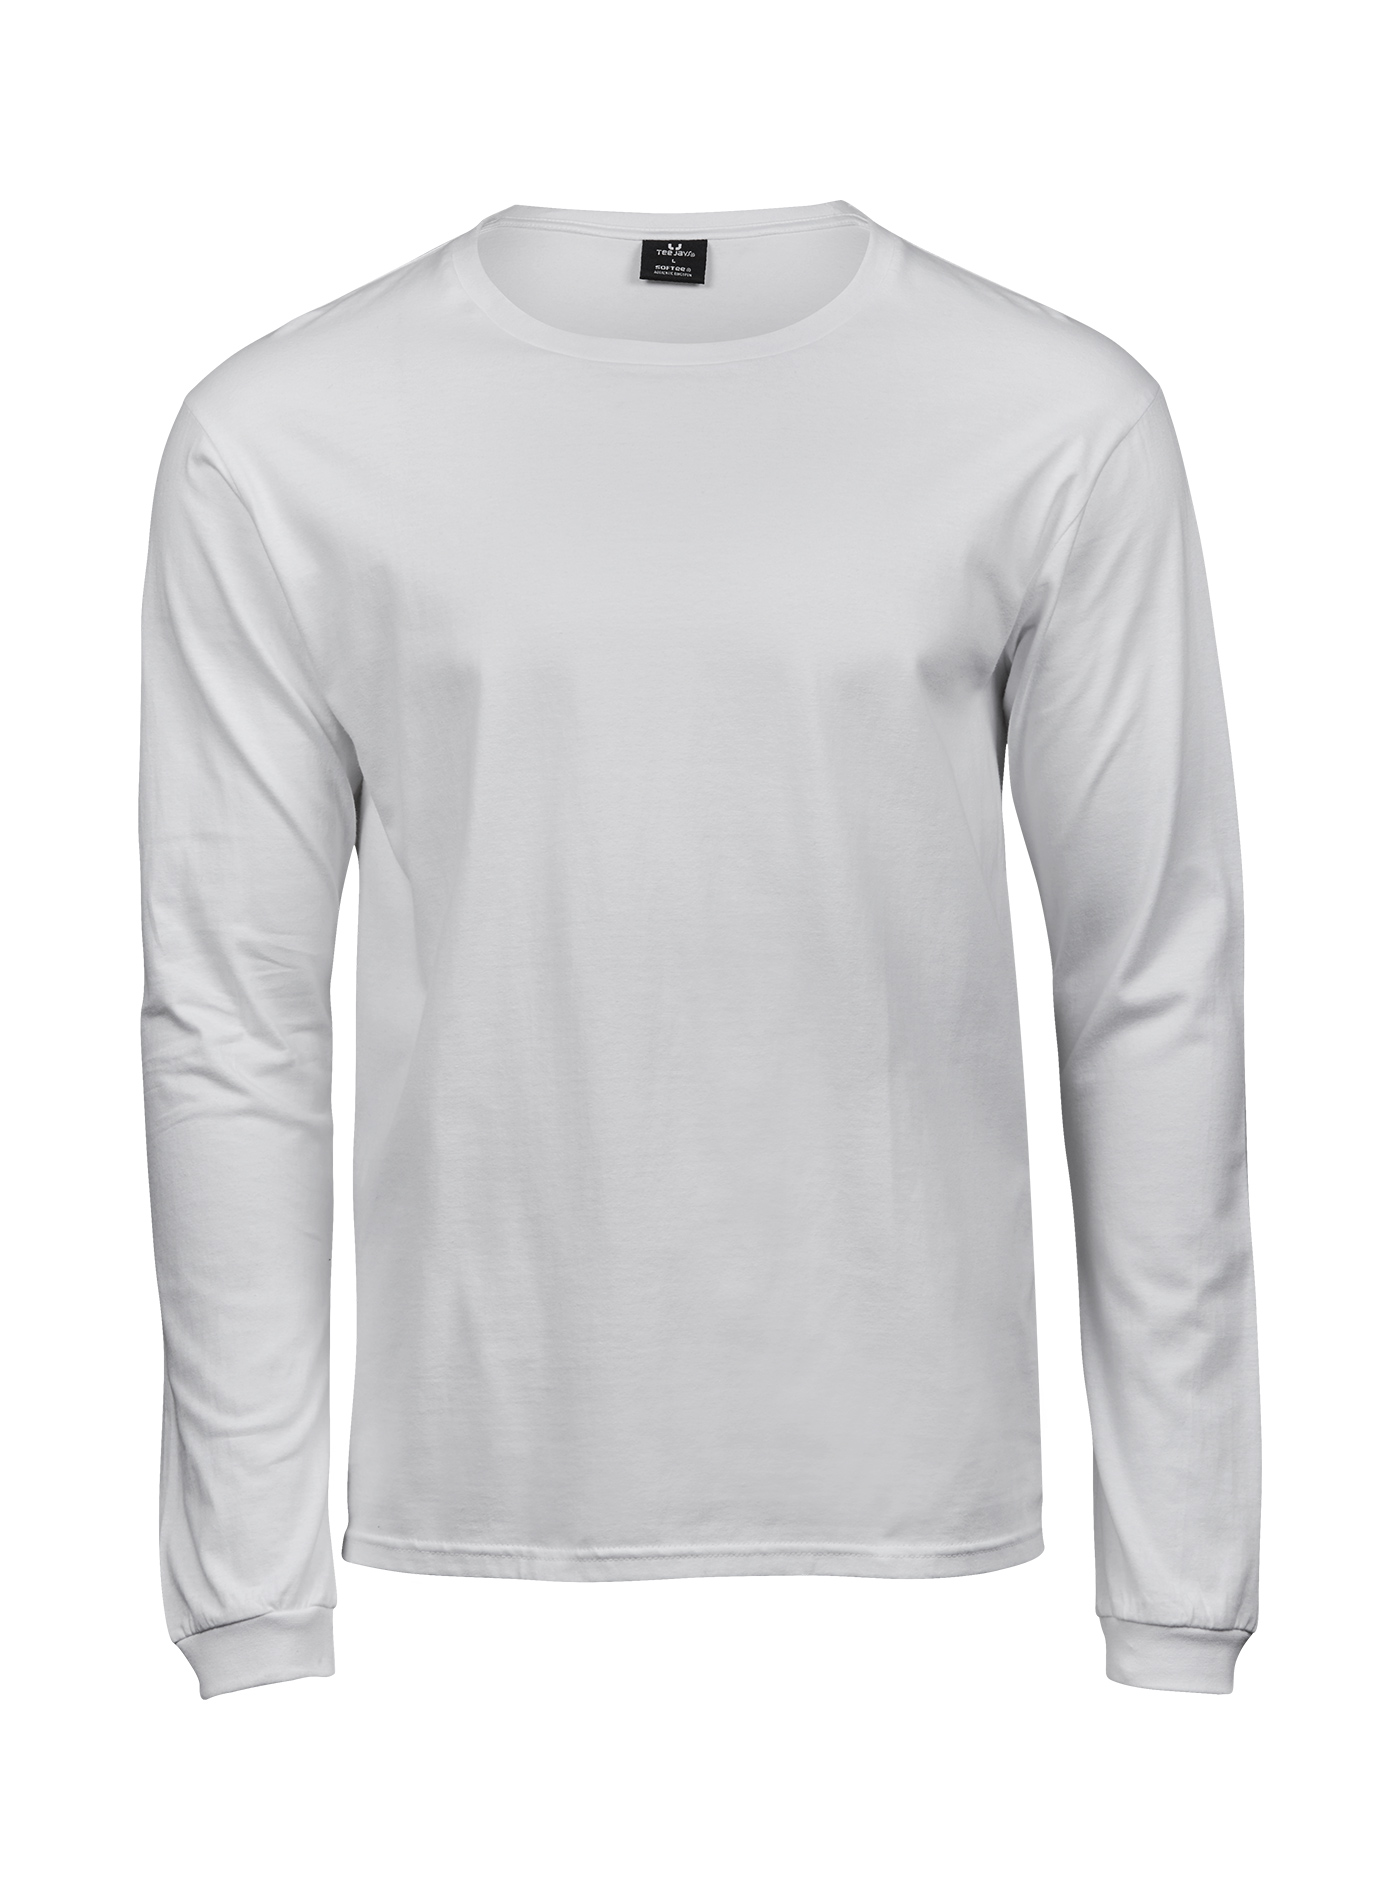 Pánské tričko s dlouhým rukávem Tee Jays Sof-Tee - Bílá L